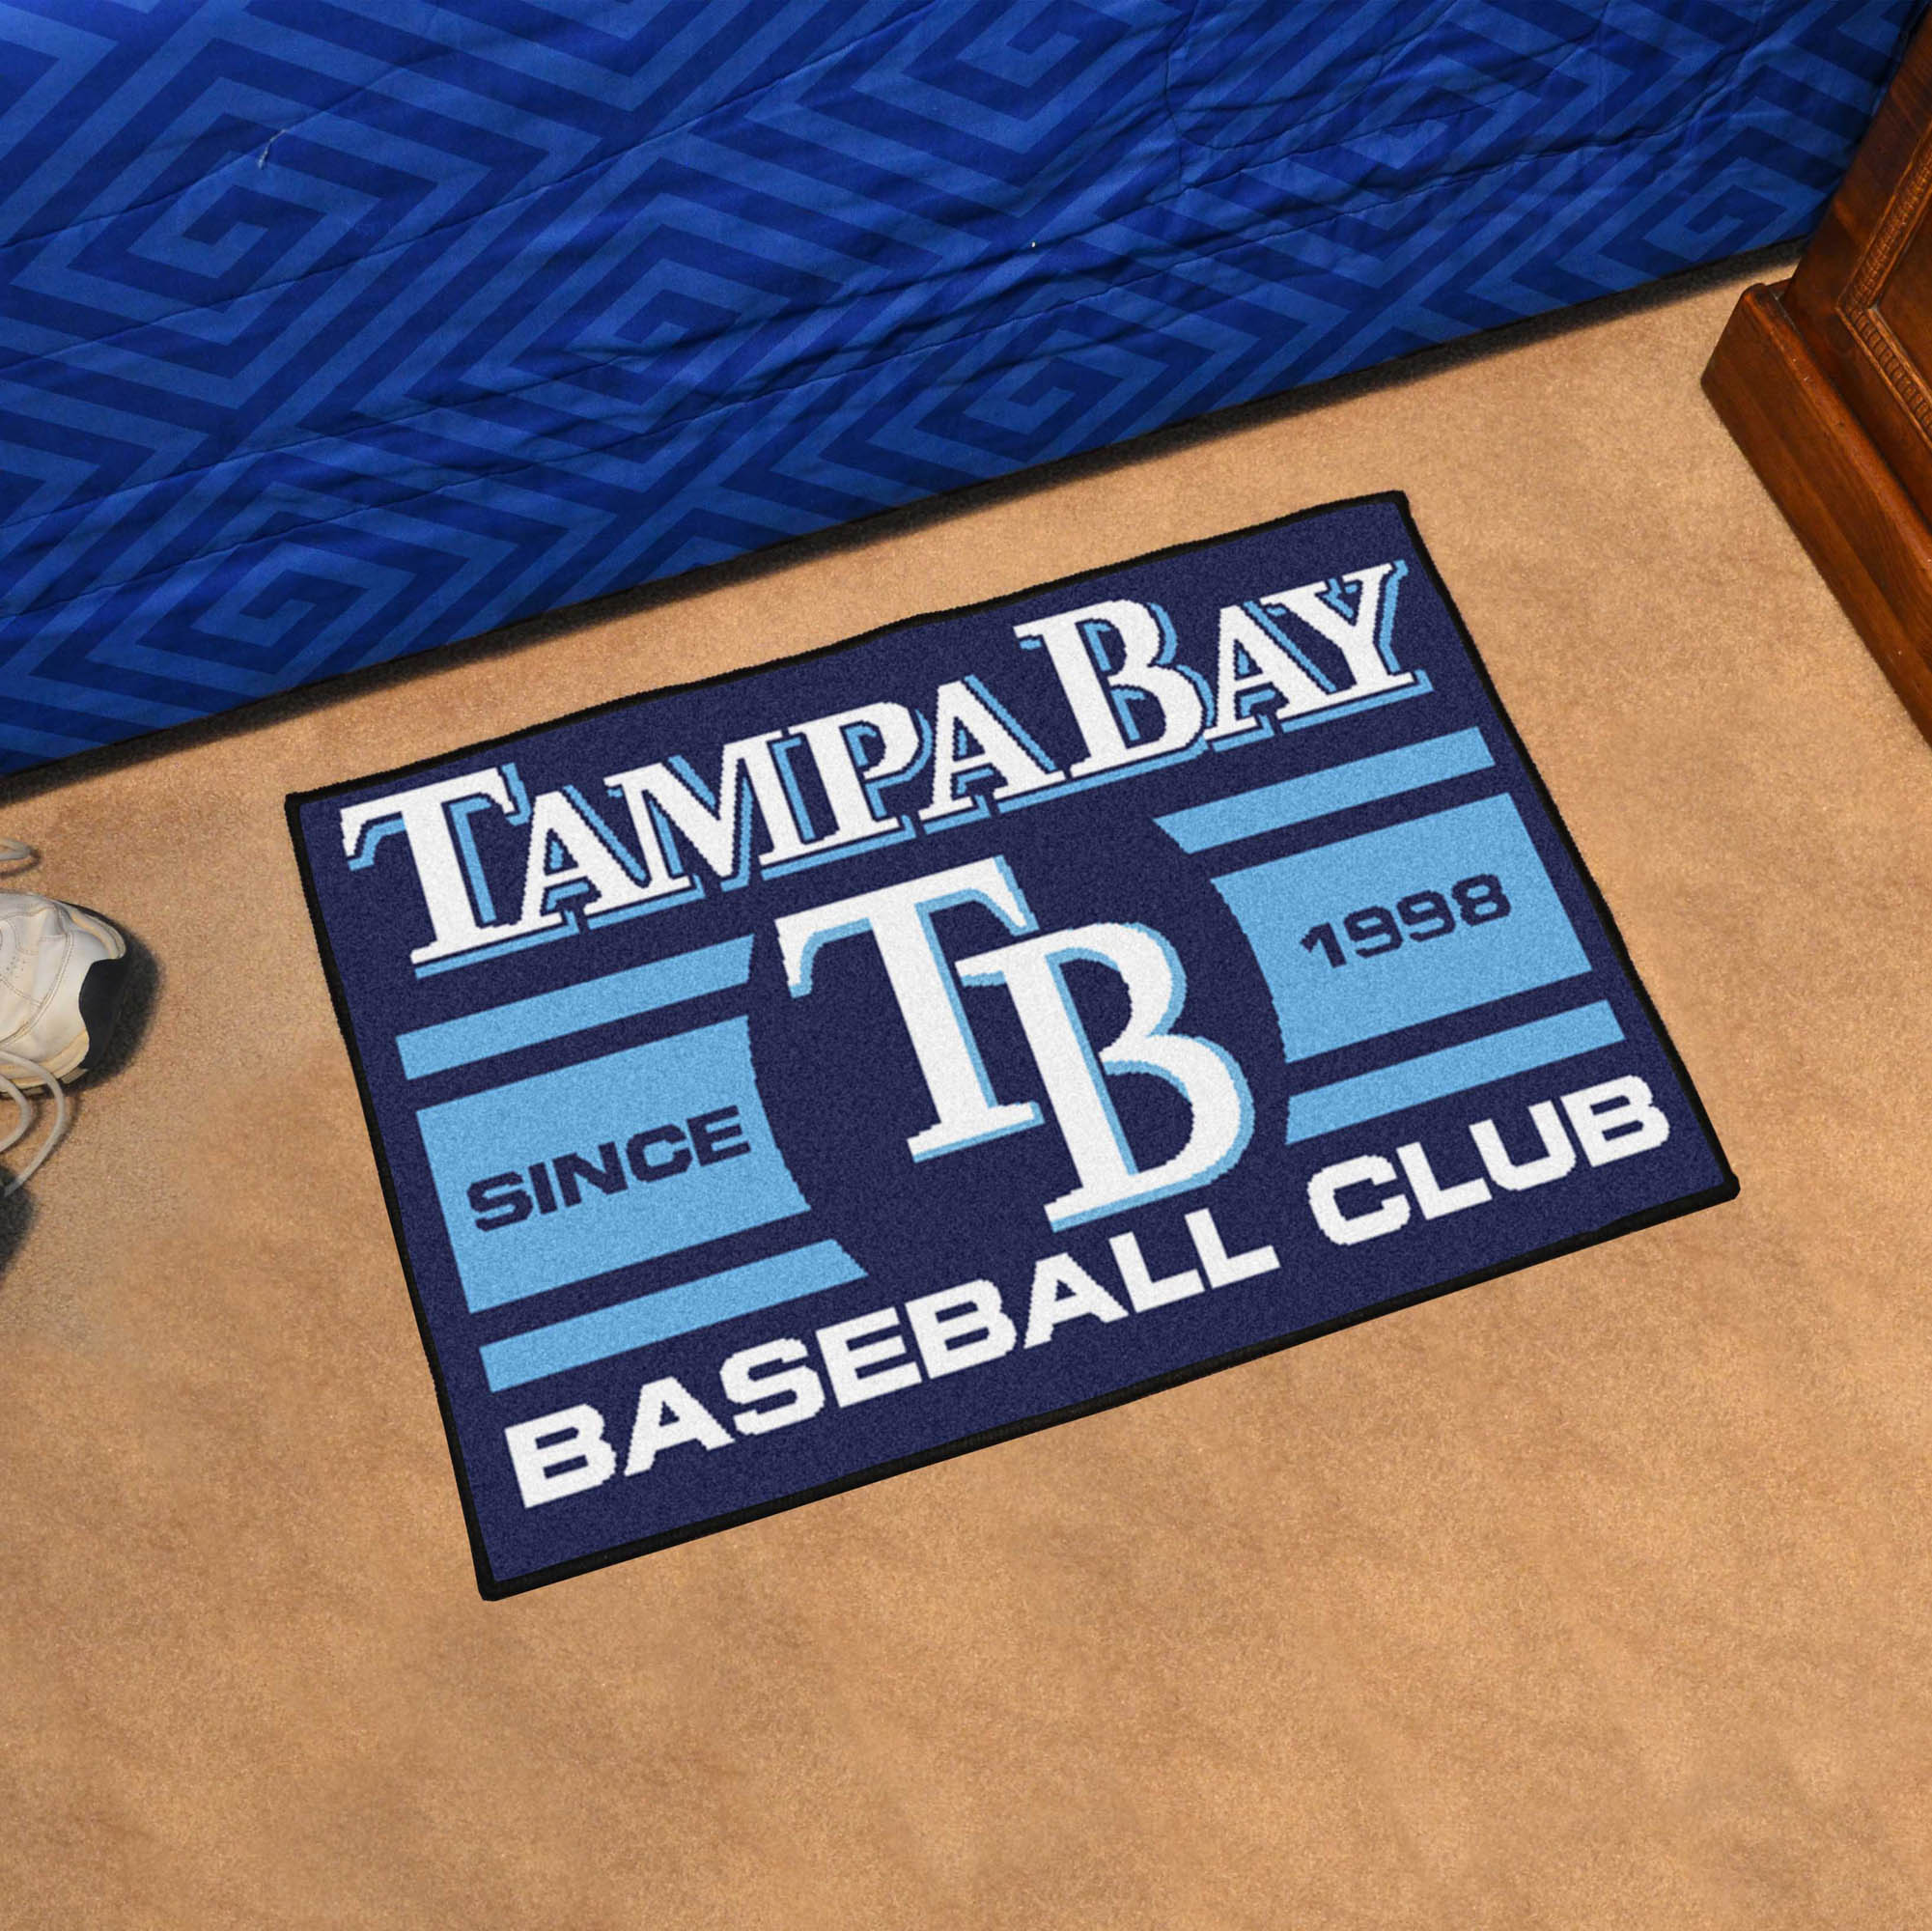 Tampa Bay Rays UNIFORM Themed Floor Mat